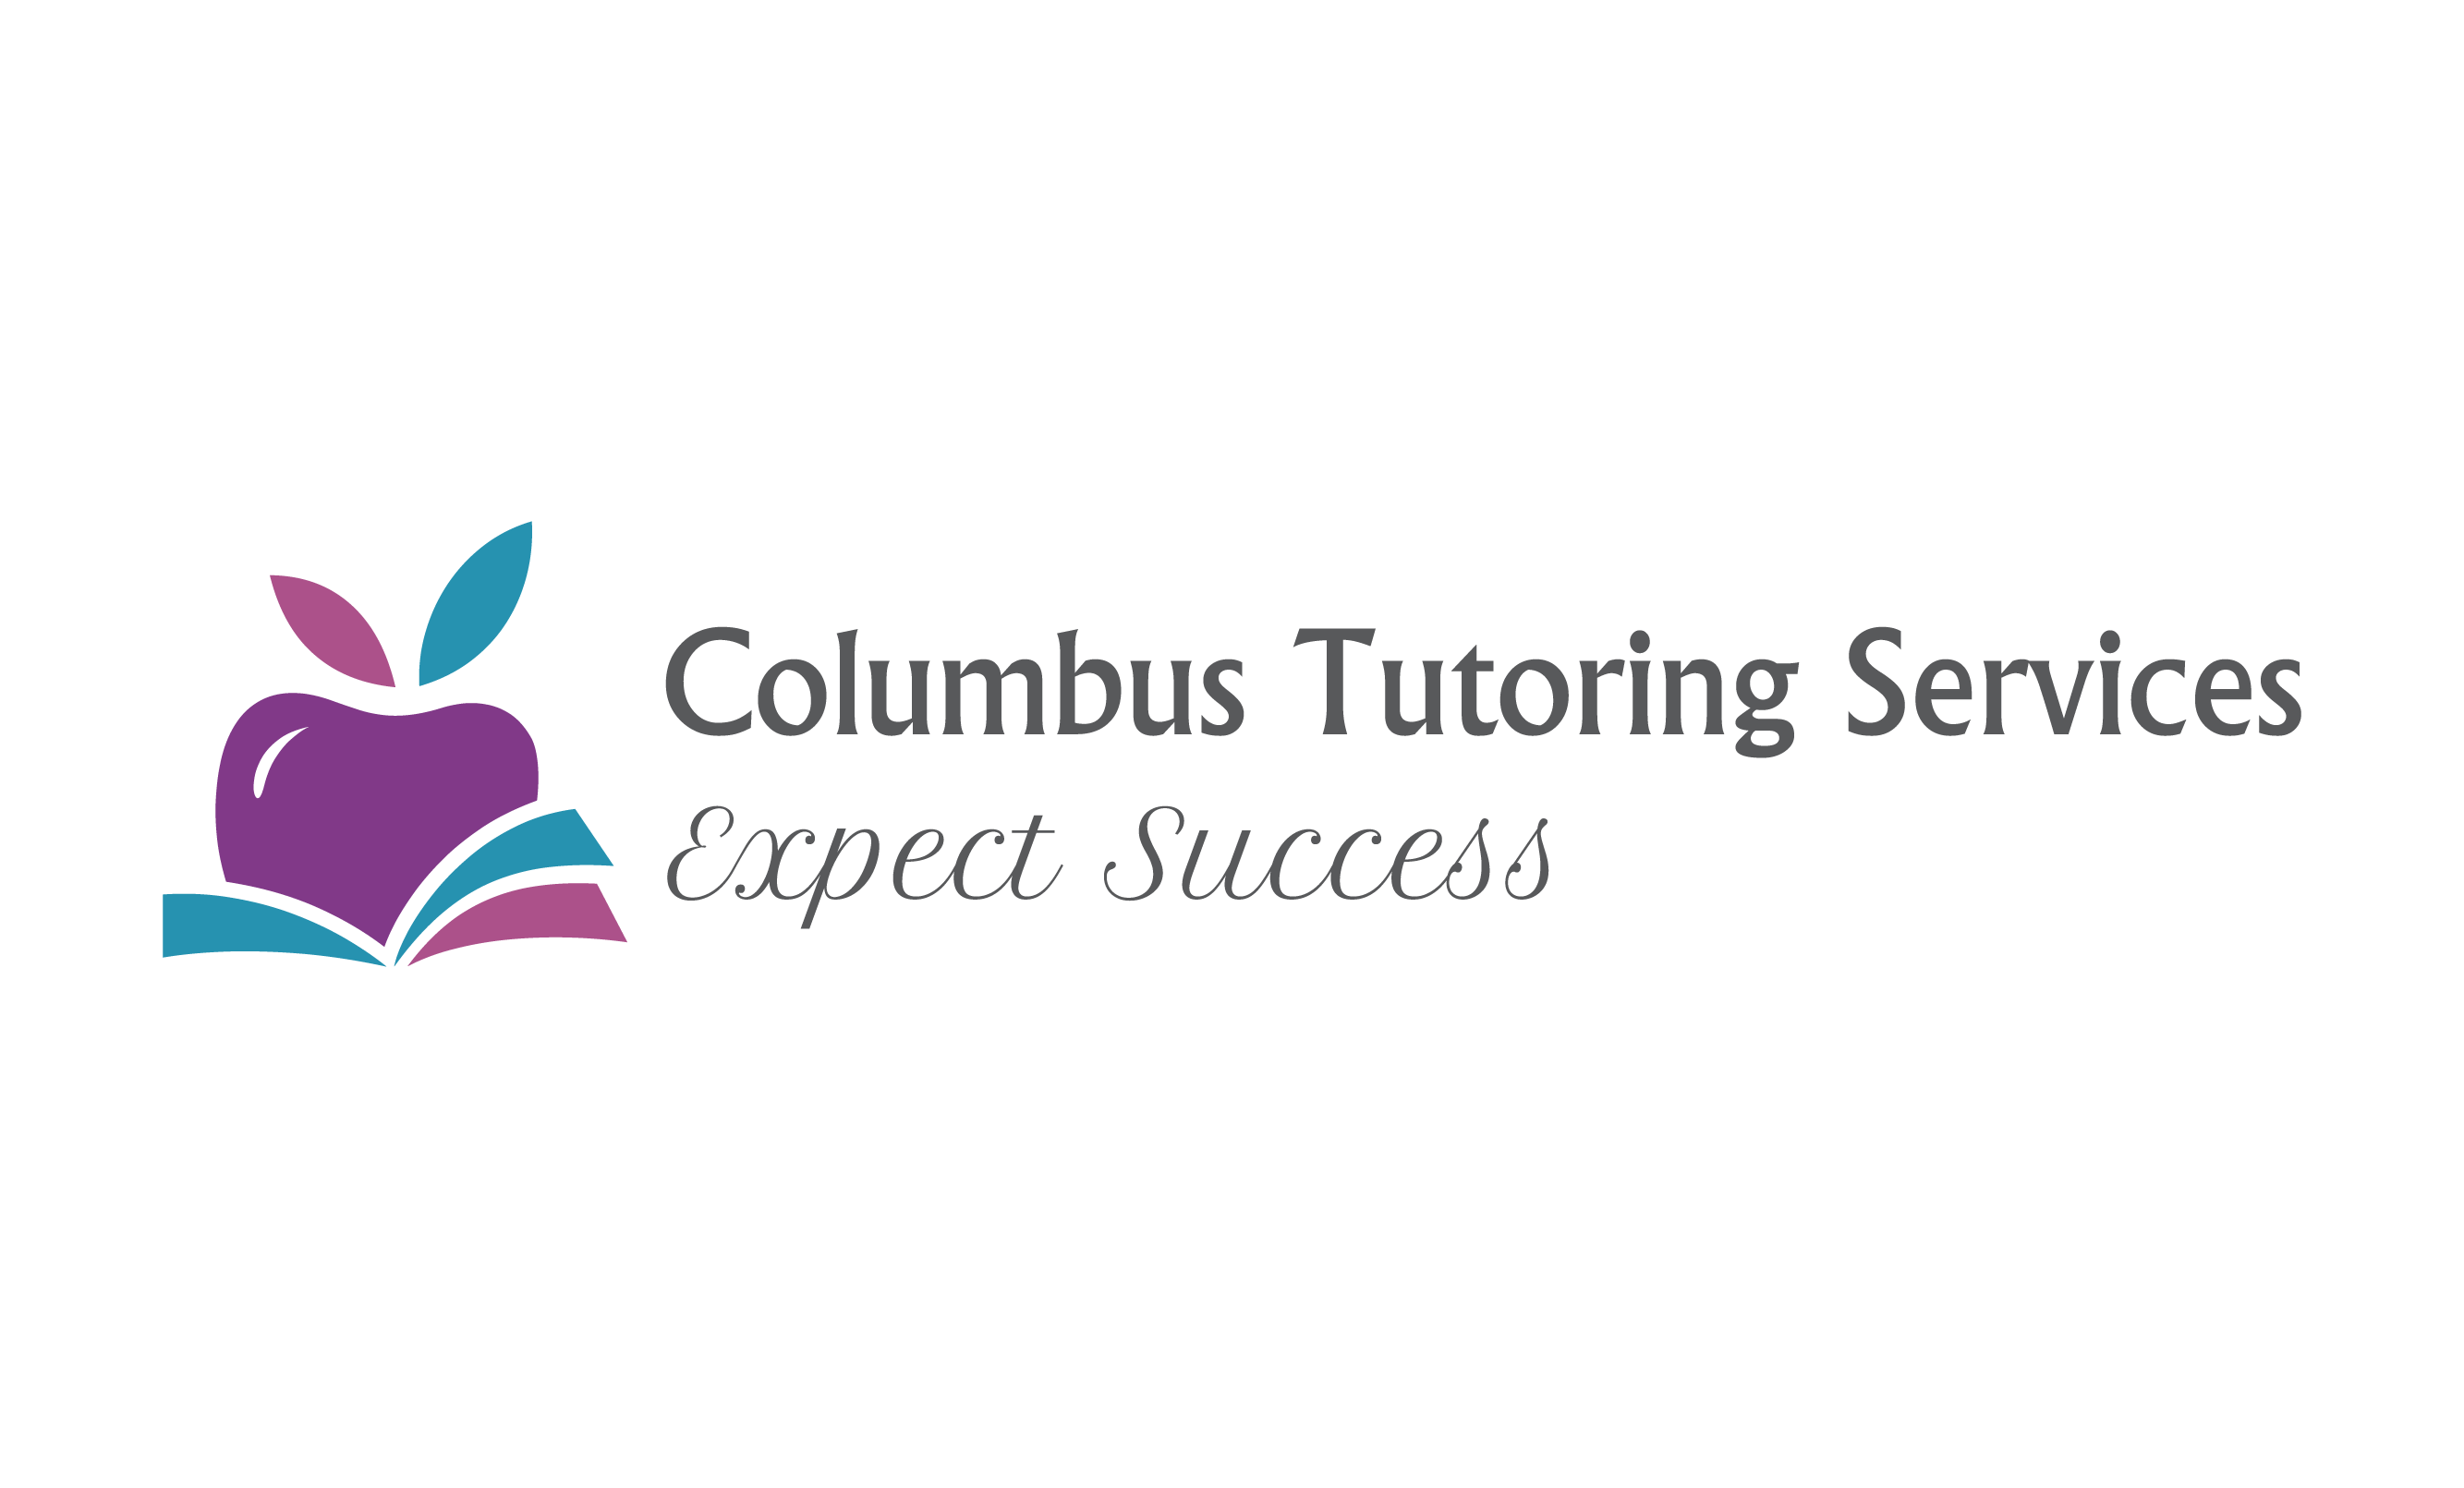 Columbus Tutoring Services logo